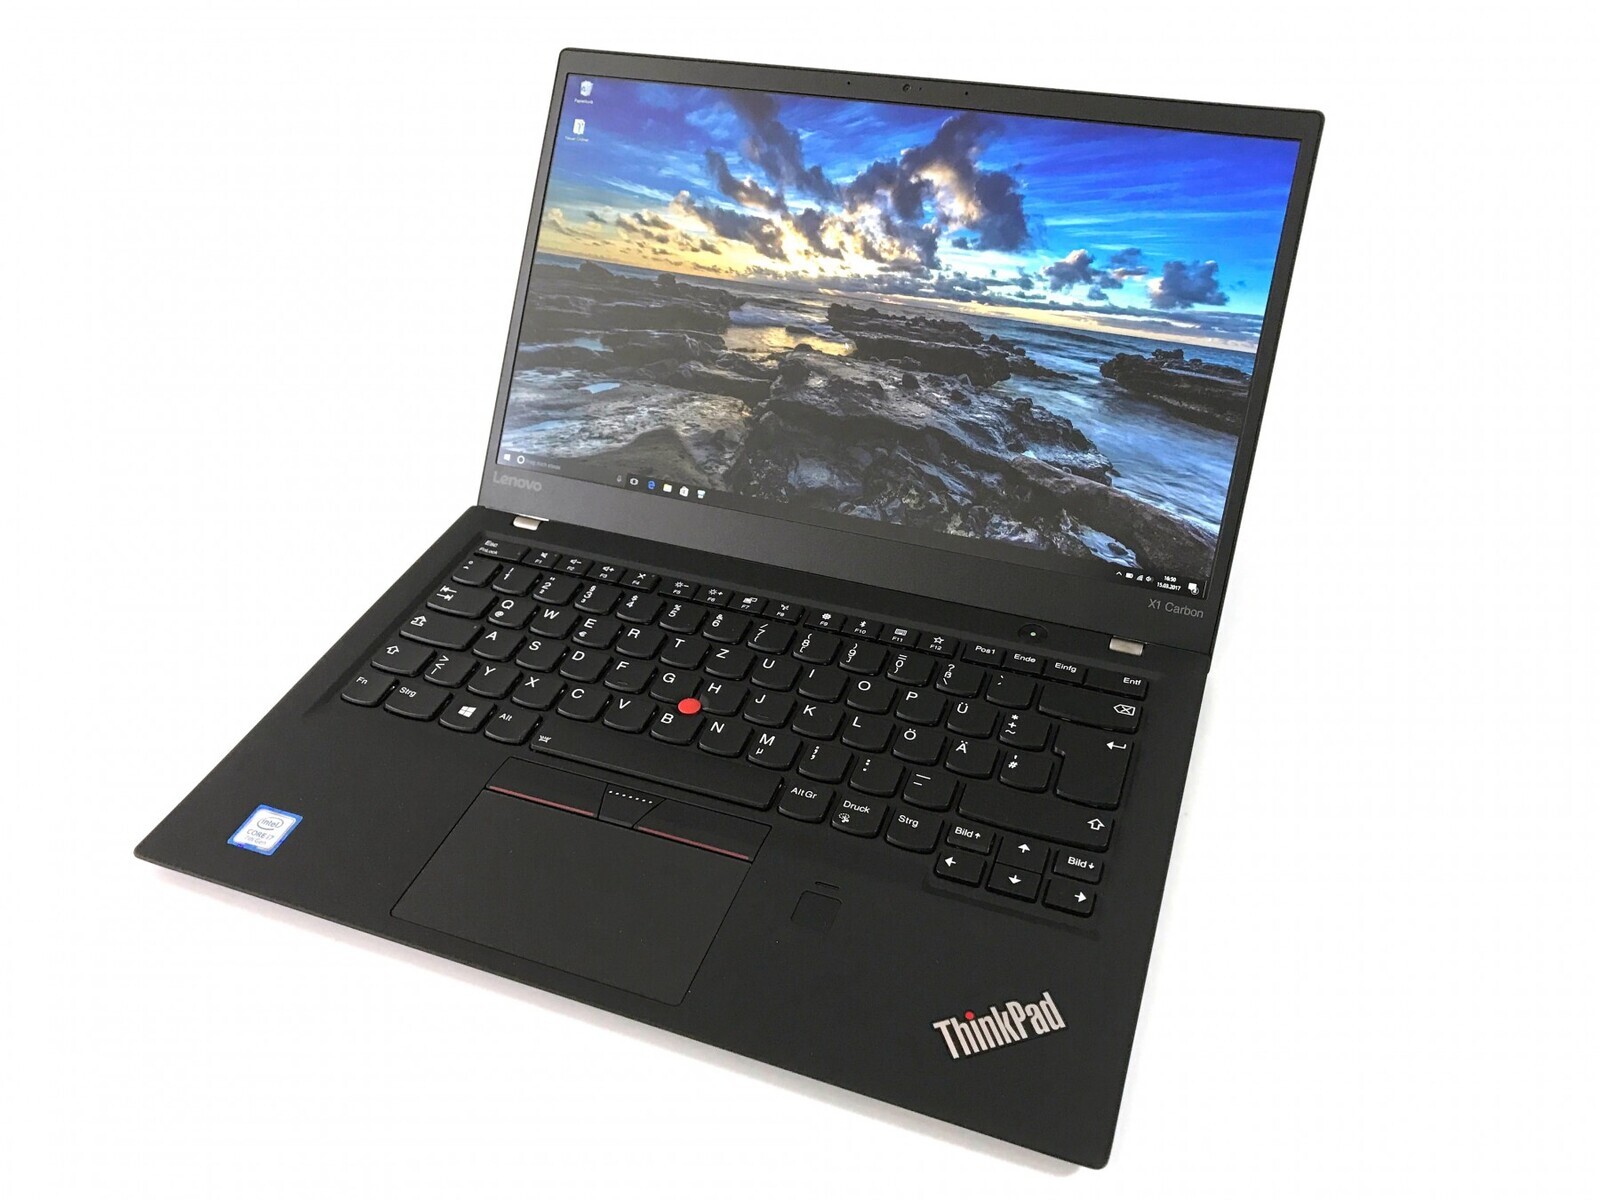 Lenovo X1 Carbon 5th Gen i5 6300U 2.40GHz 8GB RAM 128GB SSD 14" FHD Win 10 - B Grade Image 2